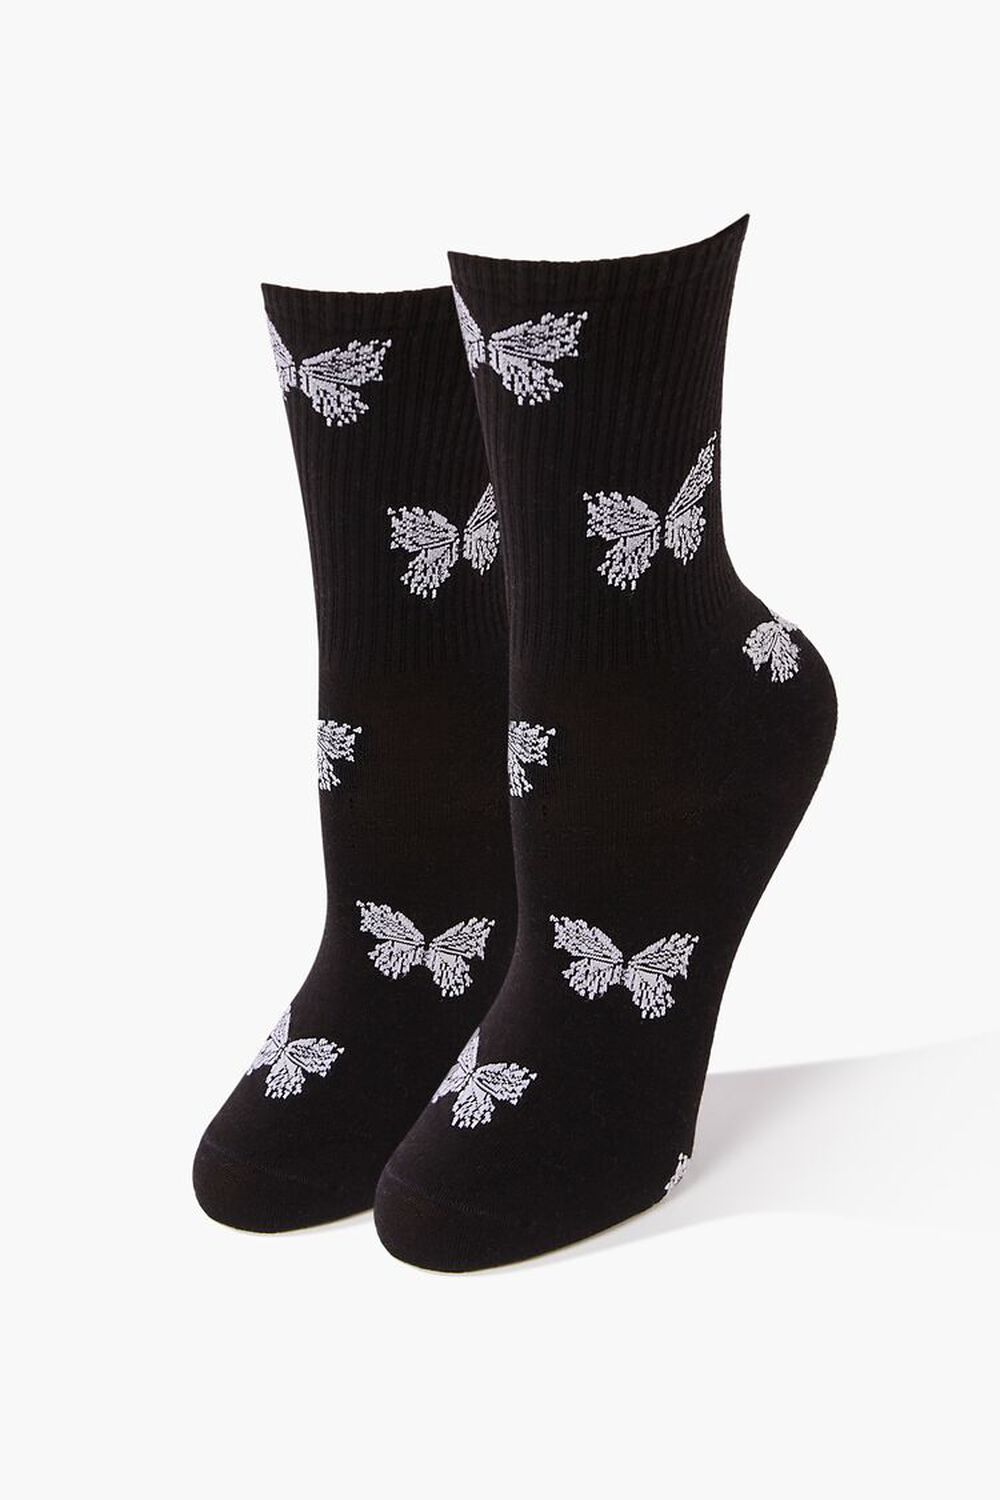 Butterfly Print Crew Socks, image 1